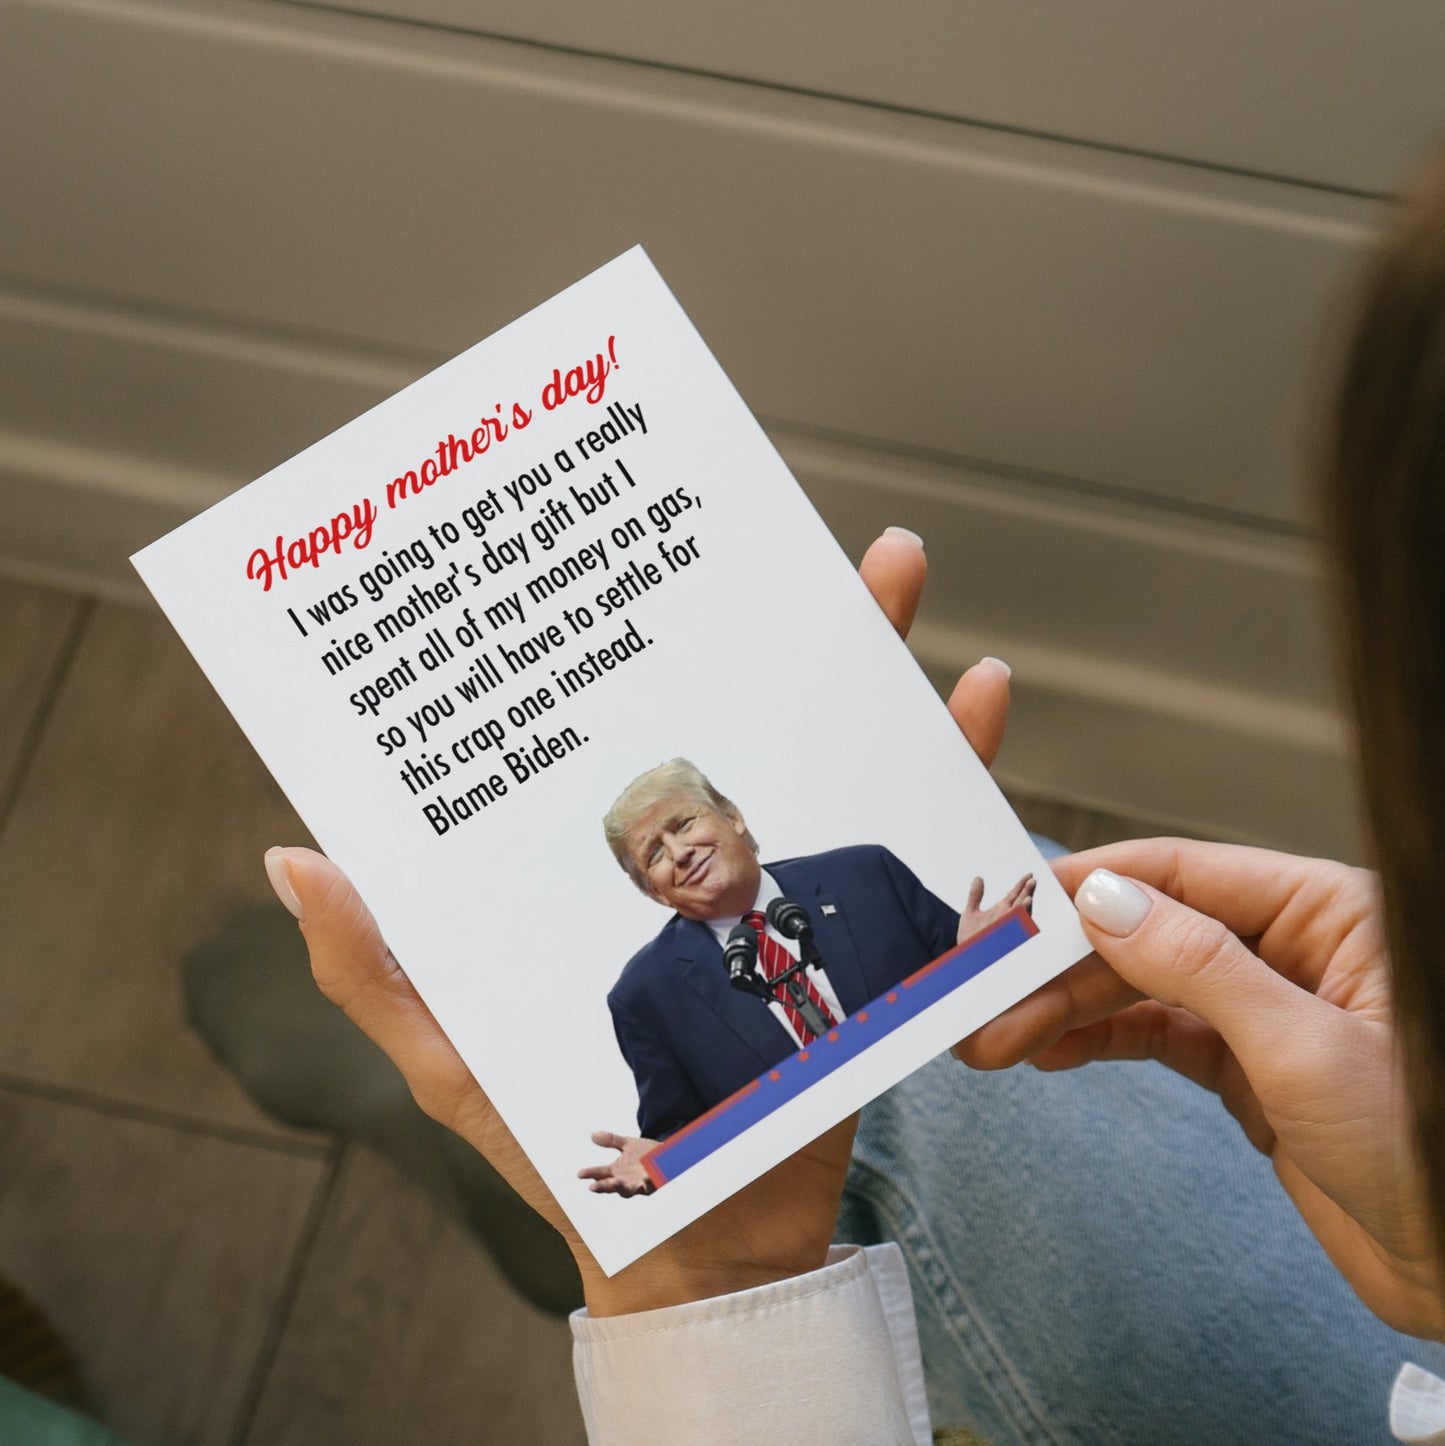 Blame Biden - Card For Mom